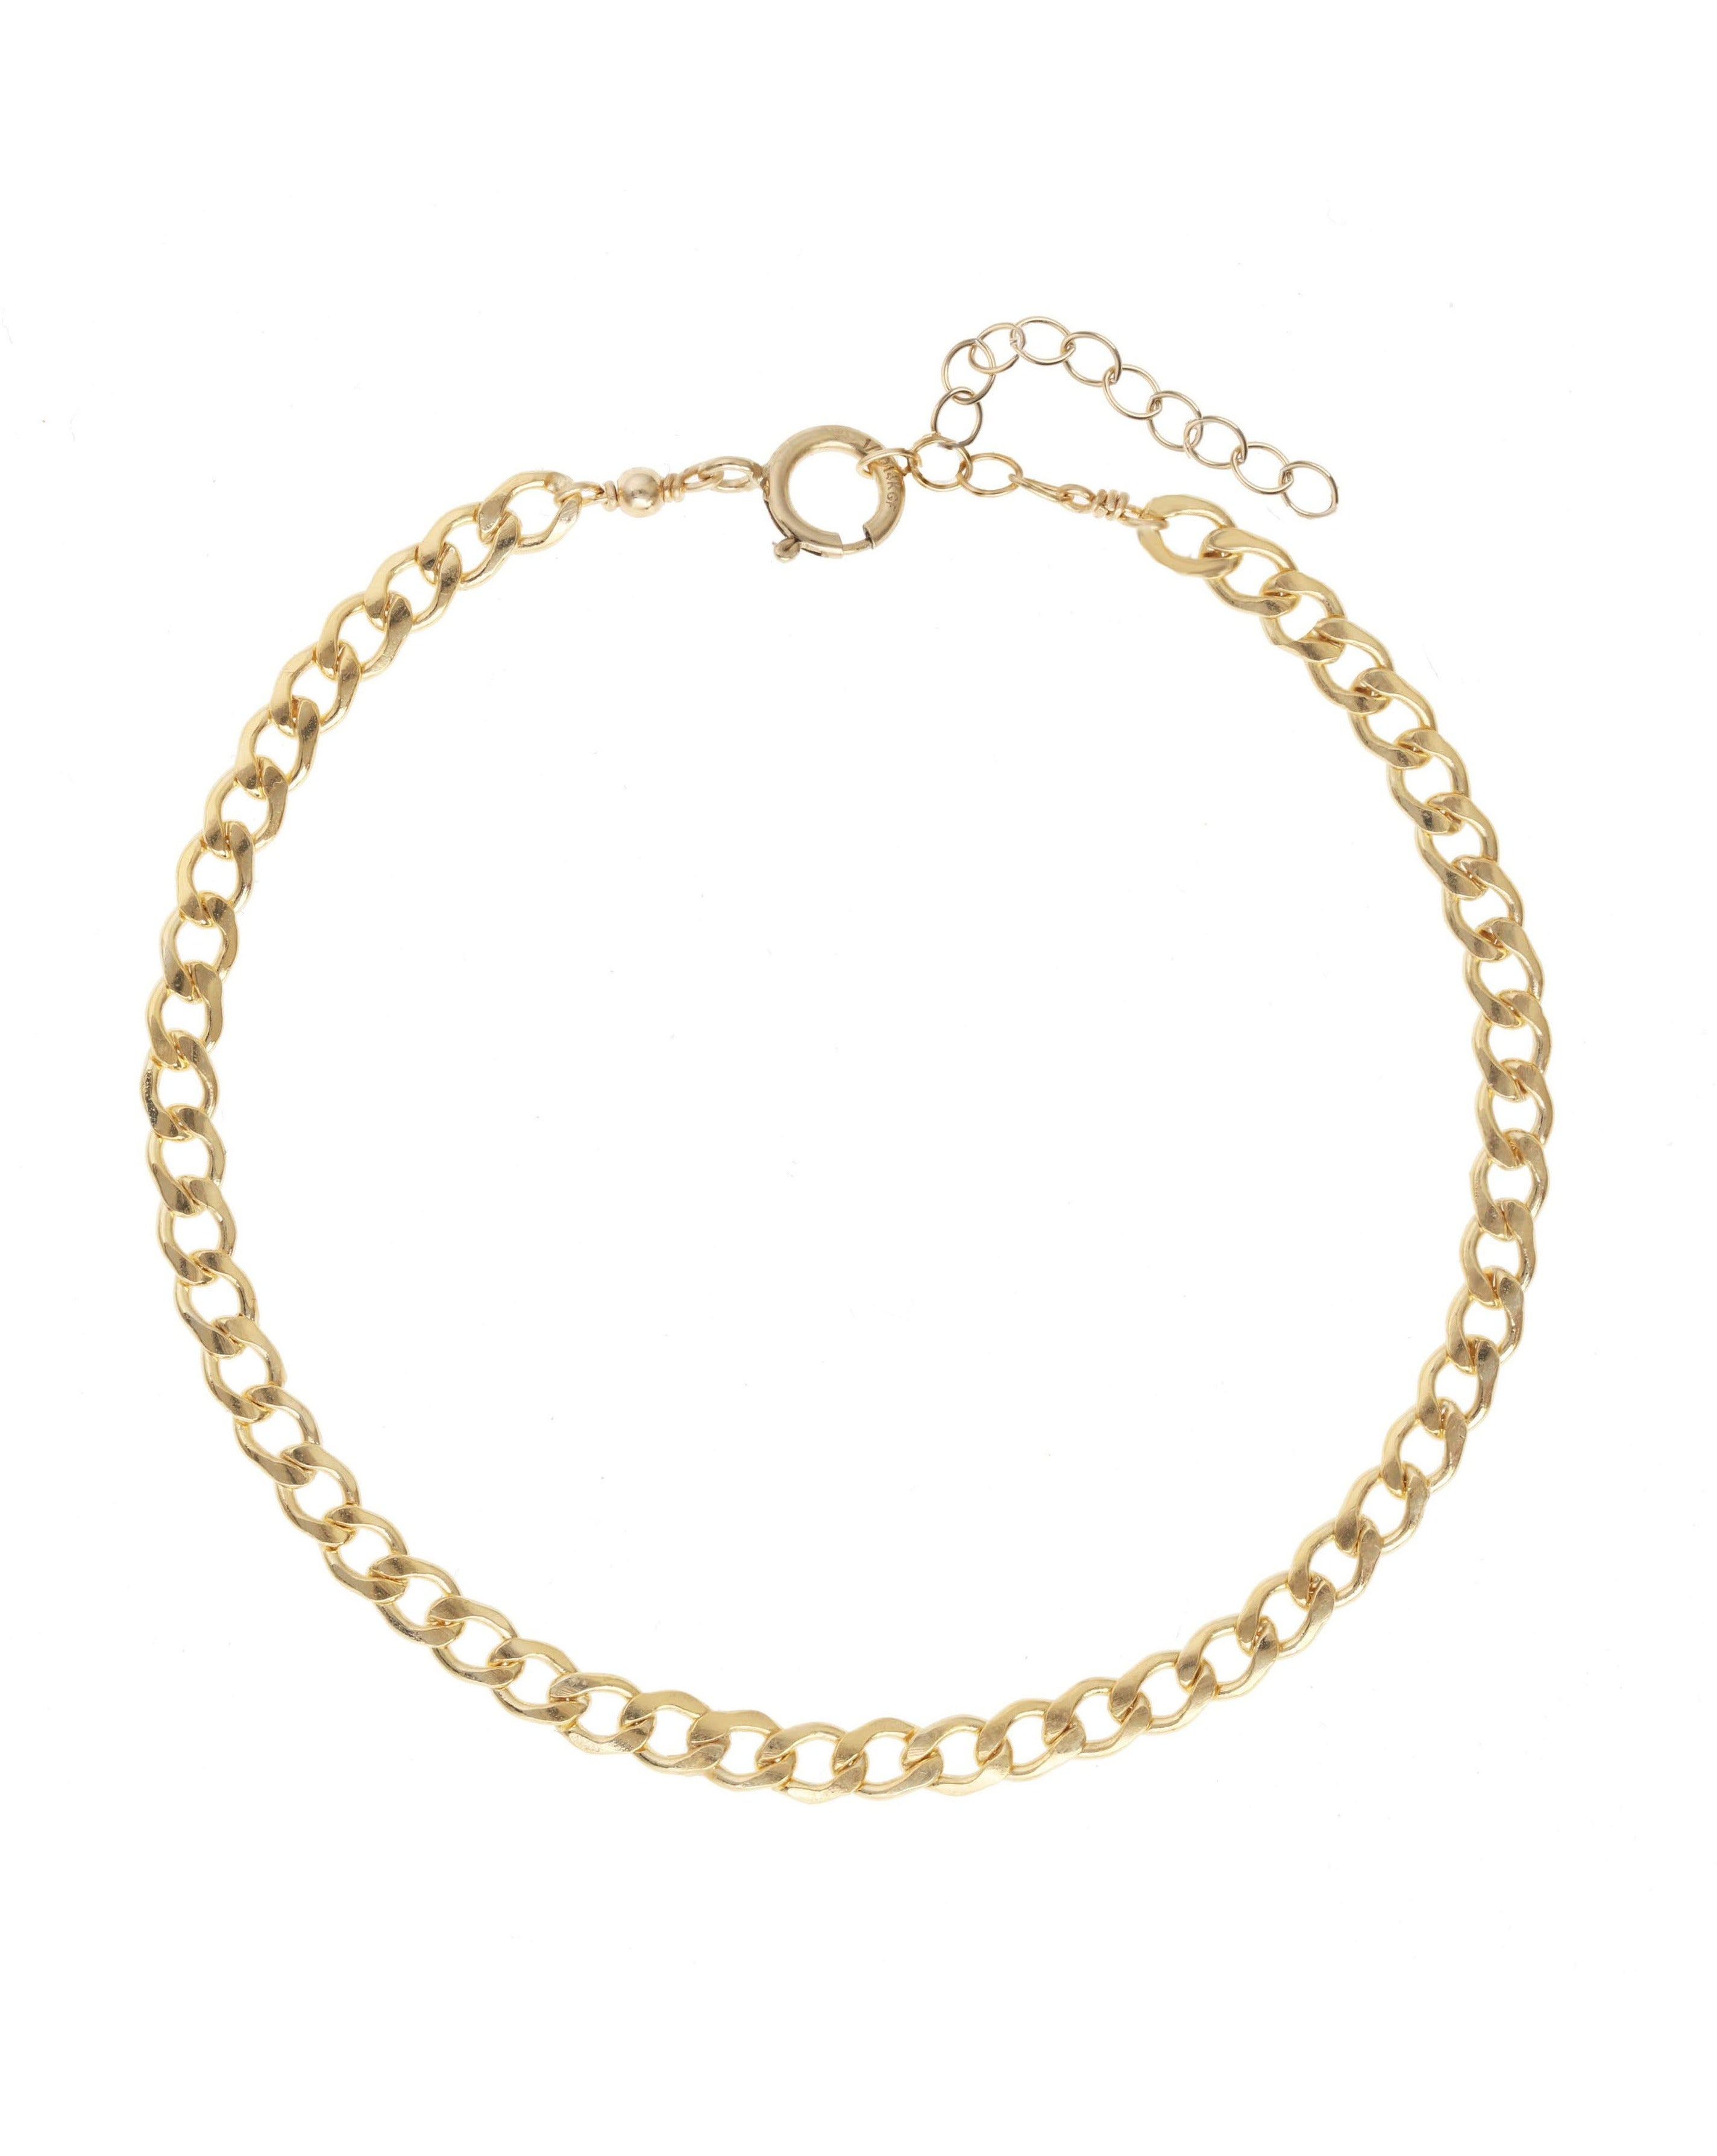 Braided Bracelet by KOZAKH. A 6 to 7 inch adjustable length chain bracelet in 14K Gold Filled.